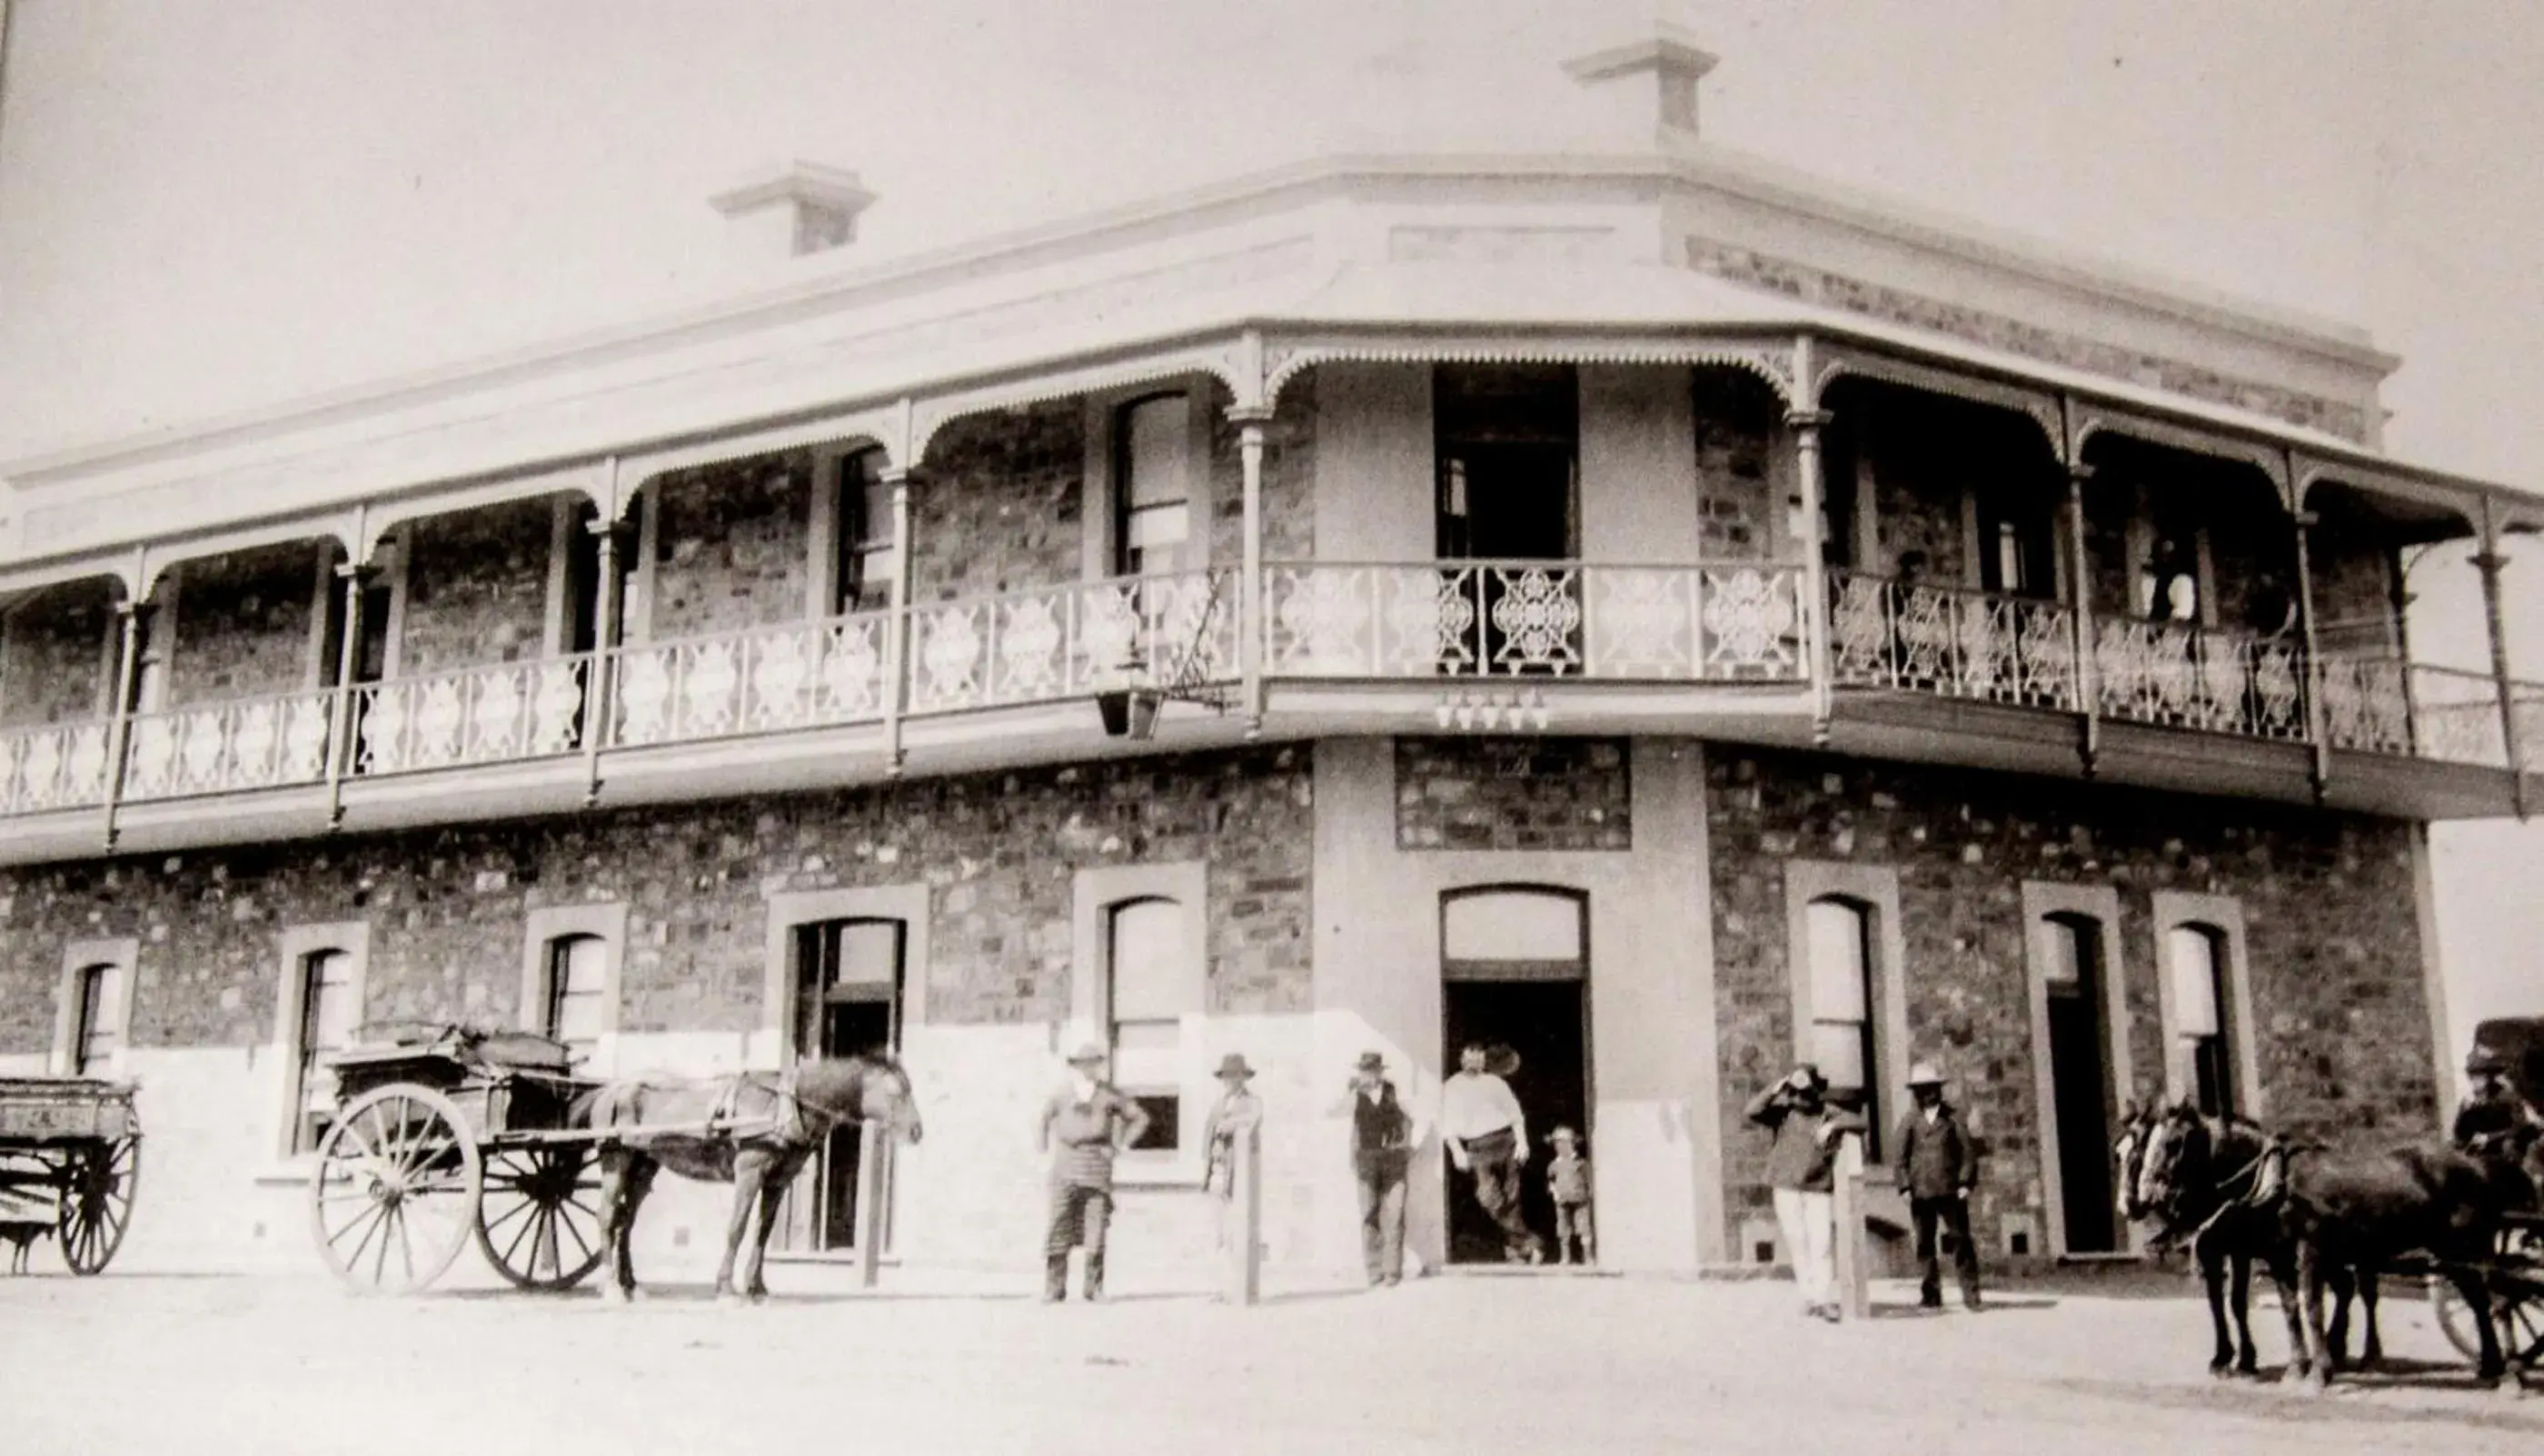 Facade/entrance, Property Building in Pampas Motel Port Augusta